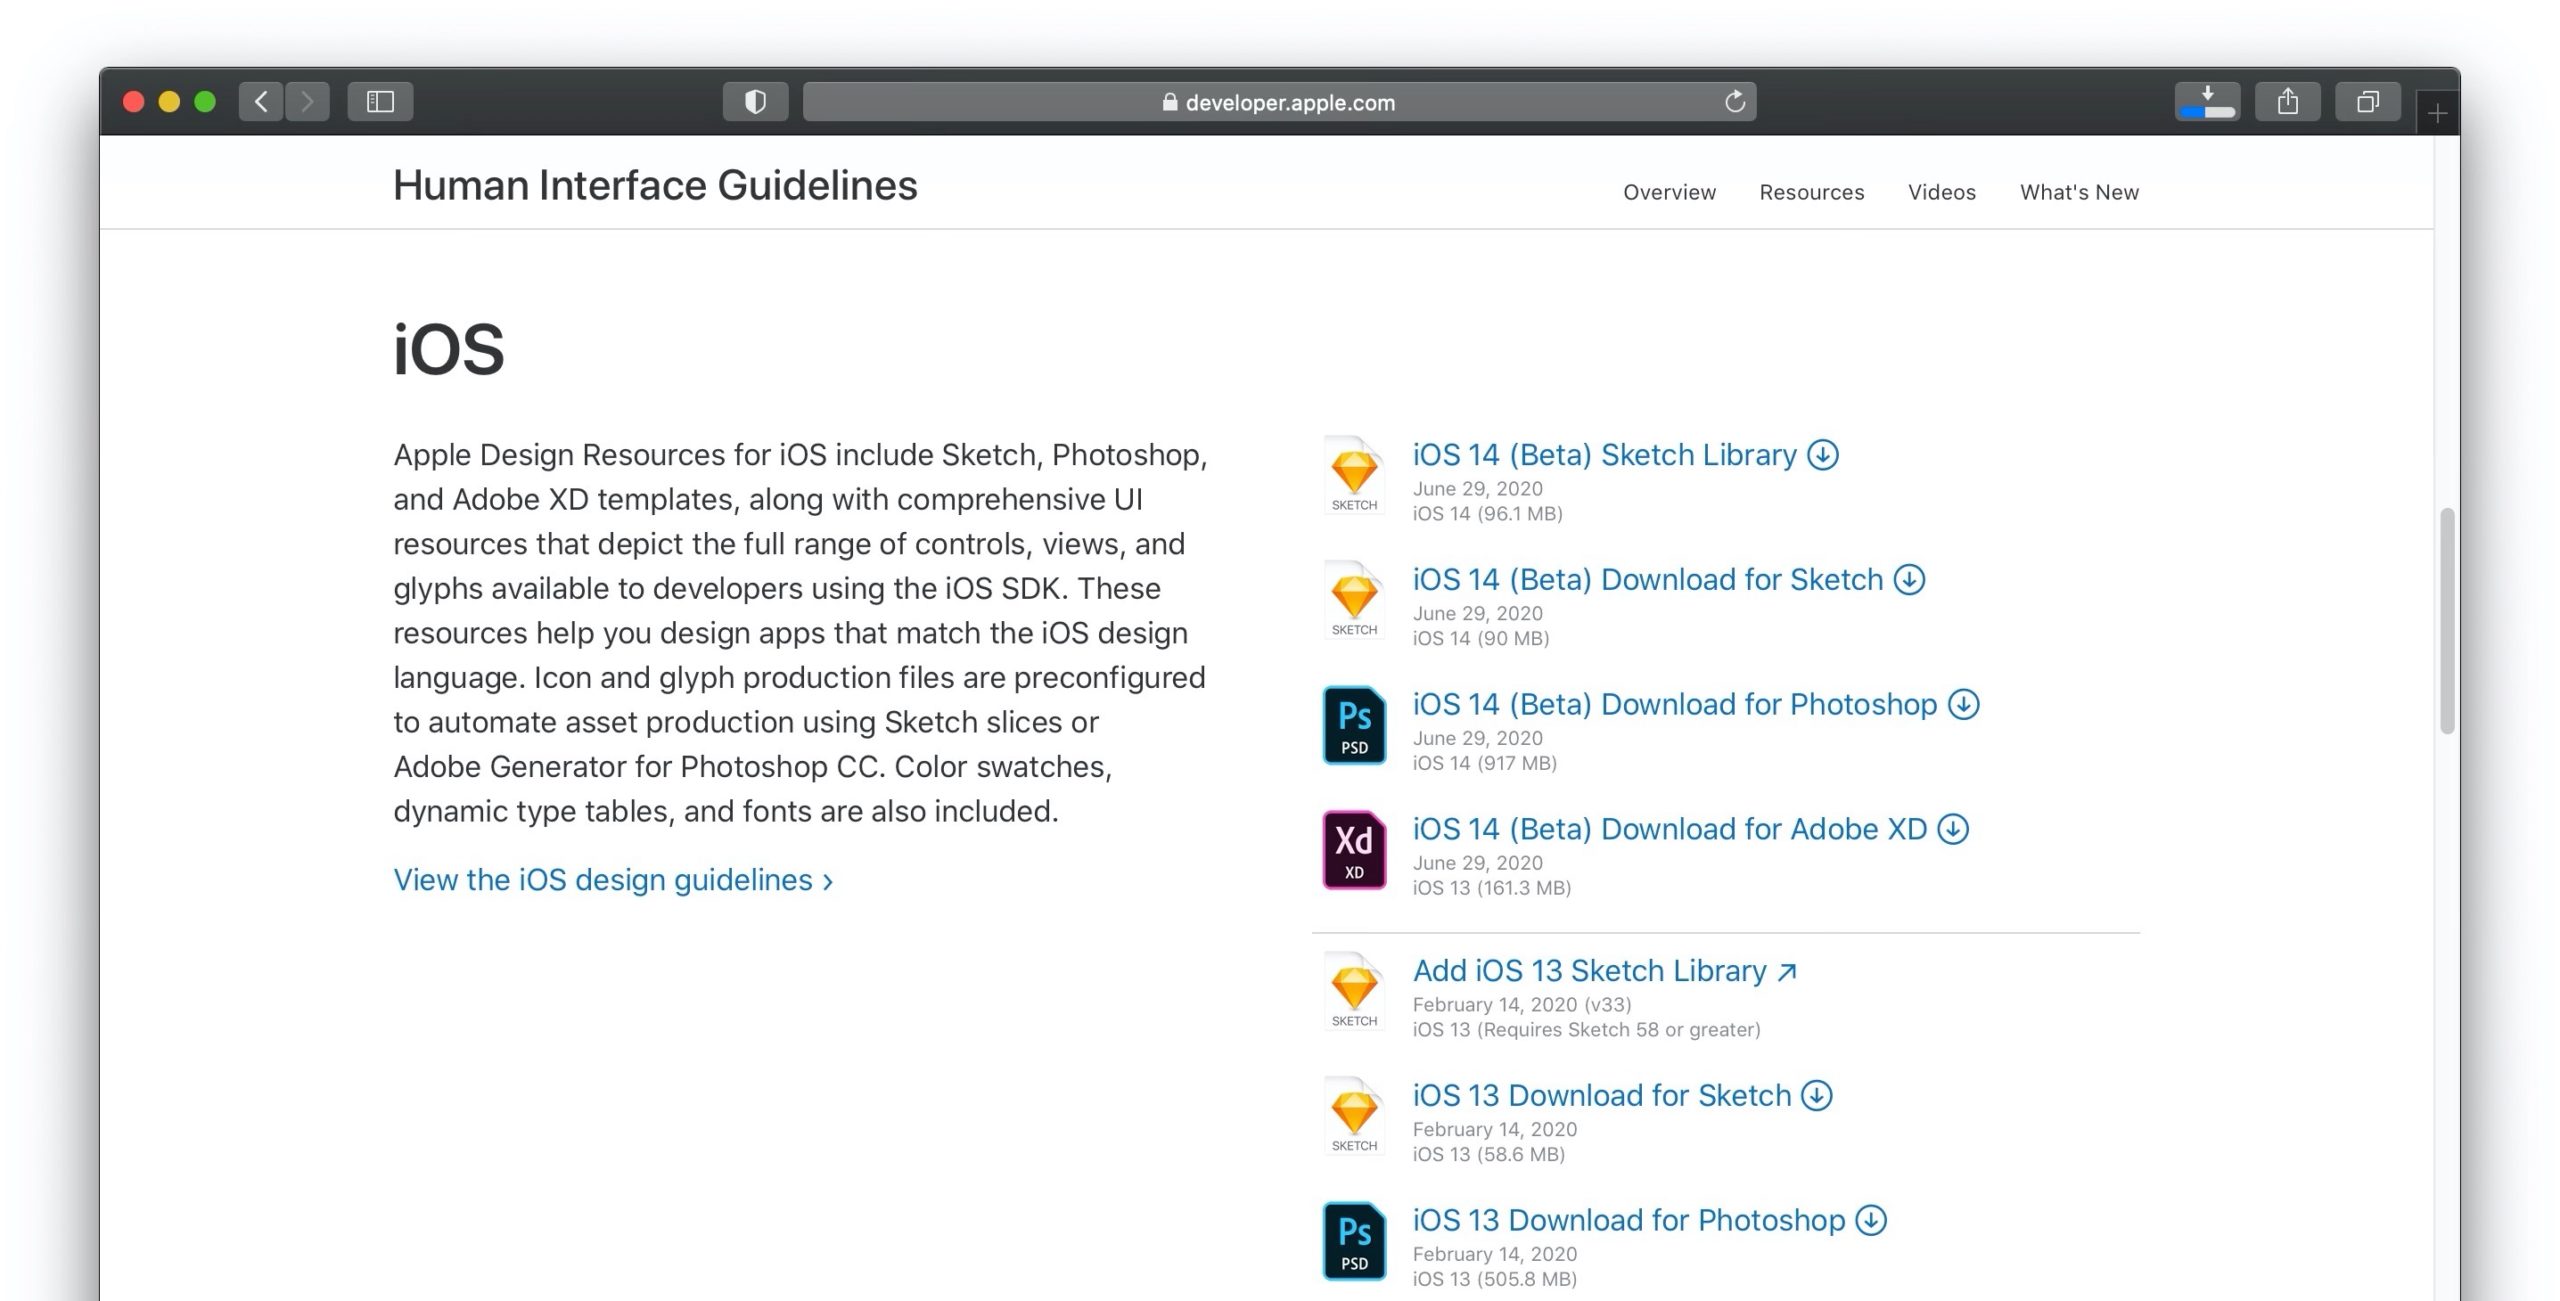 iOS 14 Apple Design Resources for Adobe XD